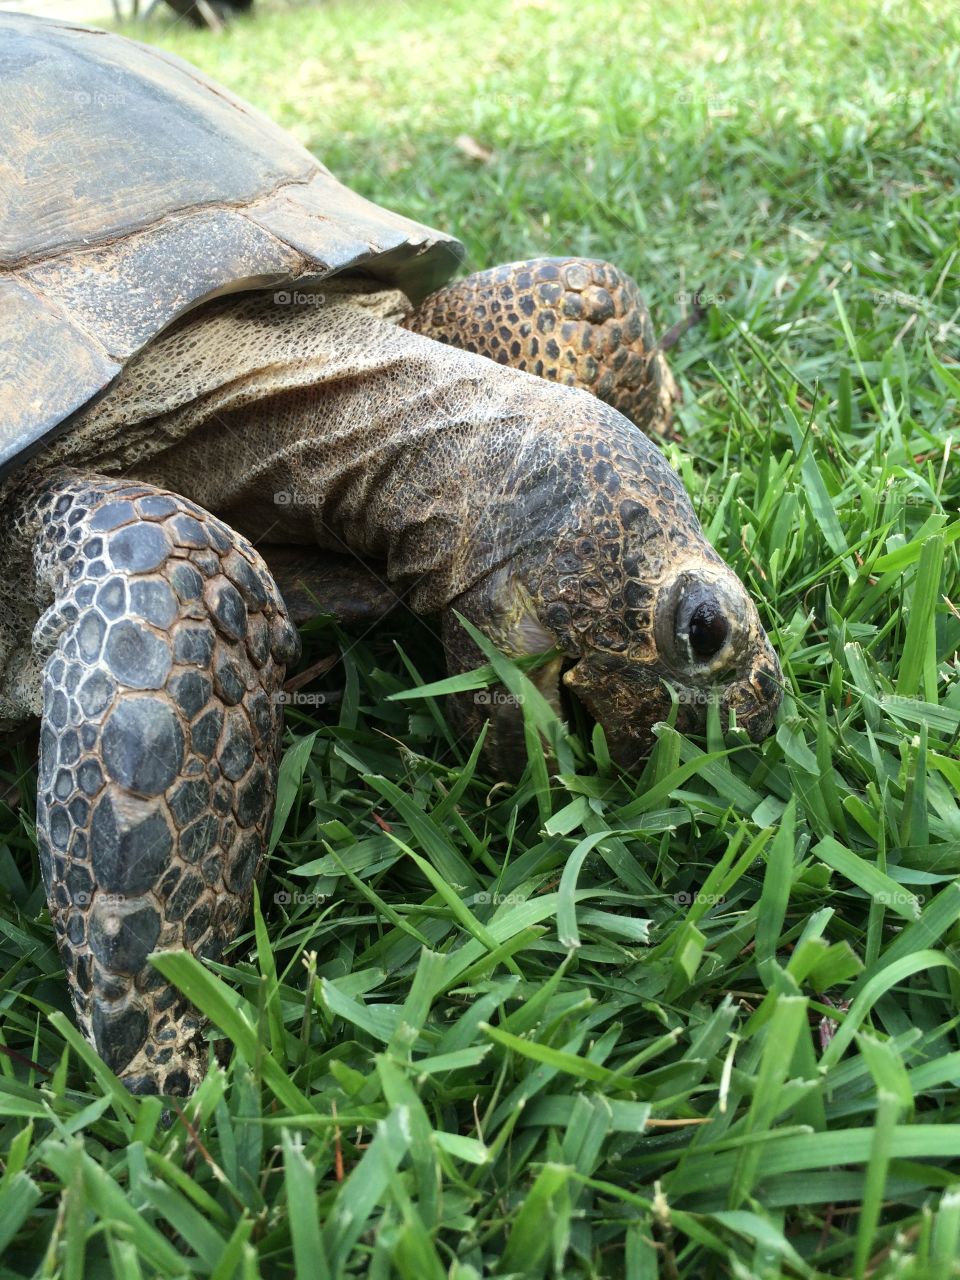 Just a gopher tortoise enjoying his salad
